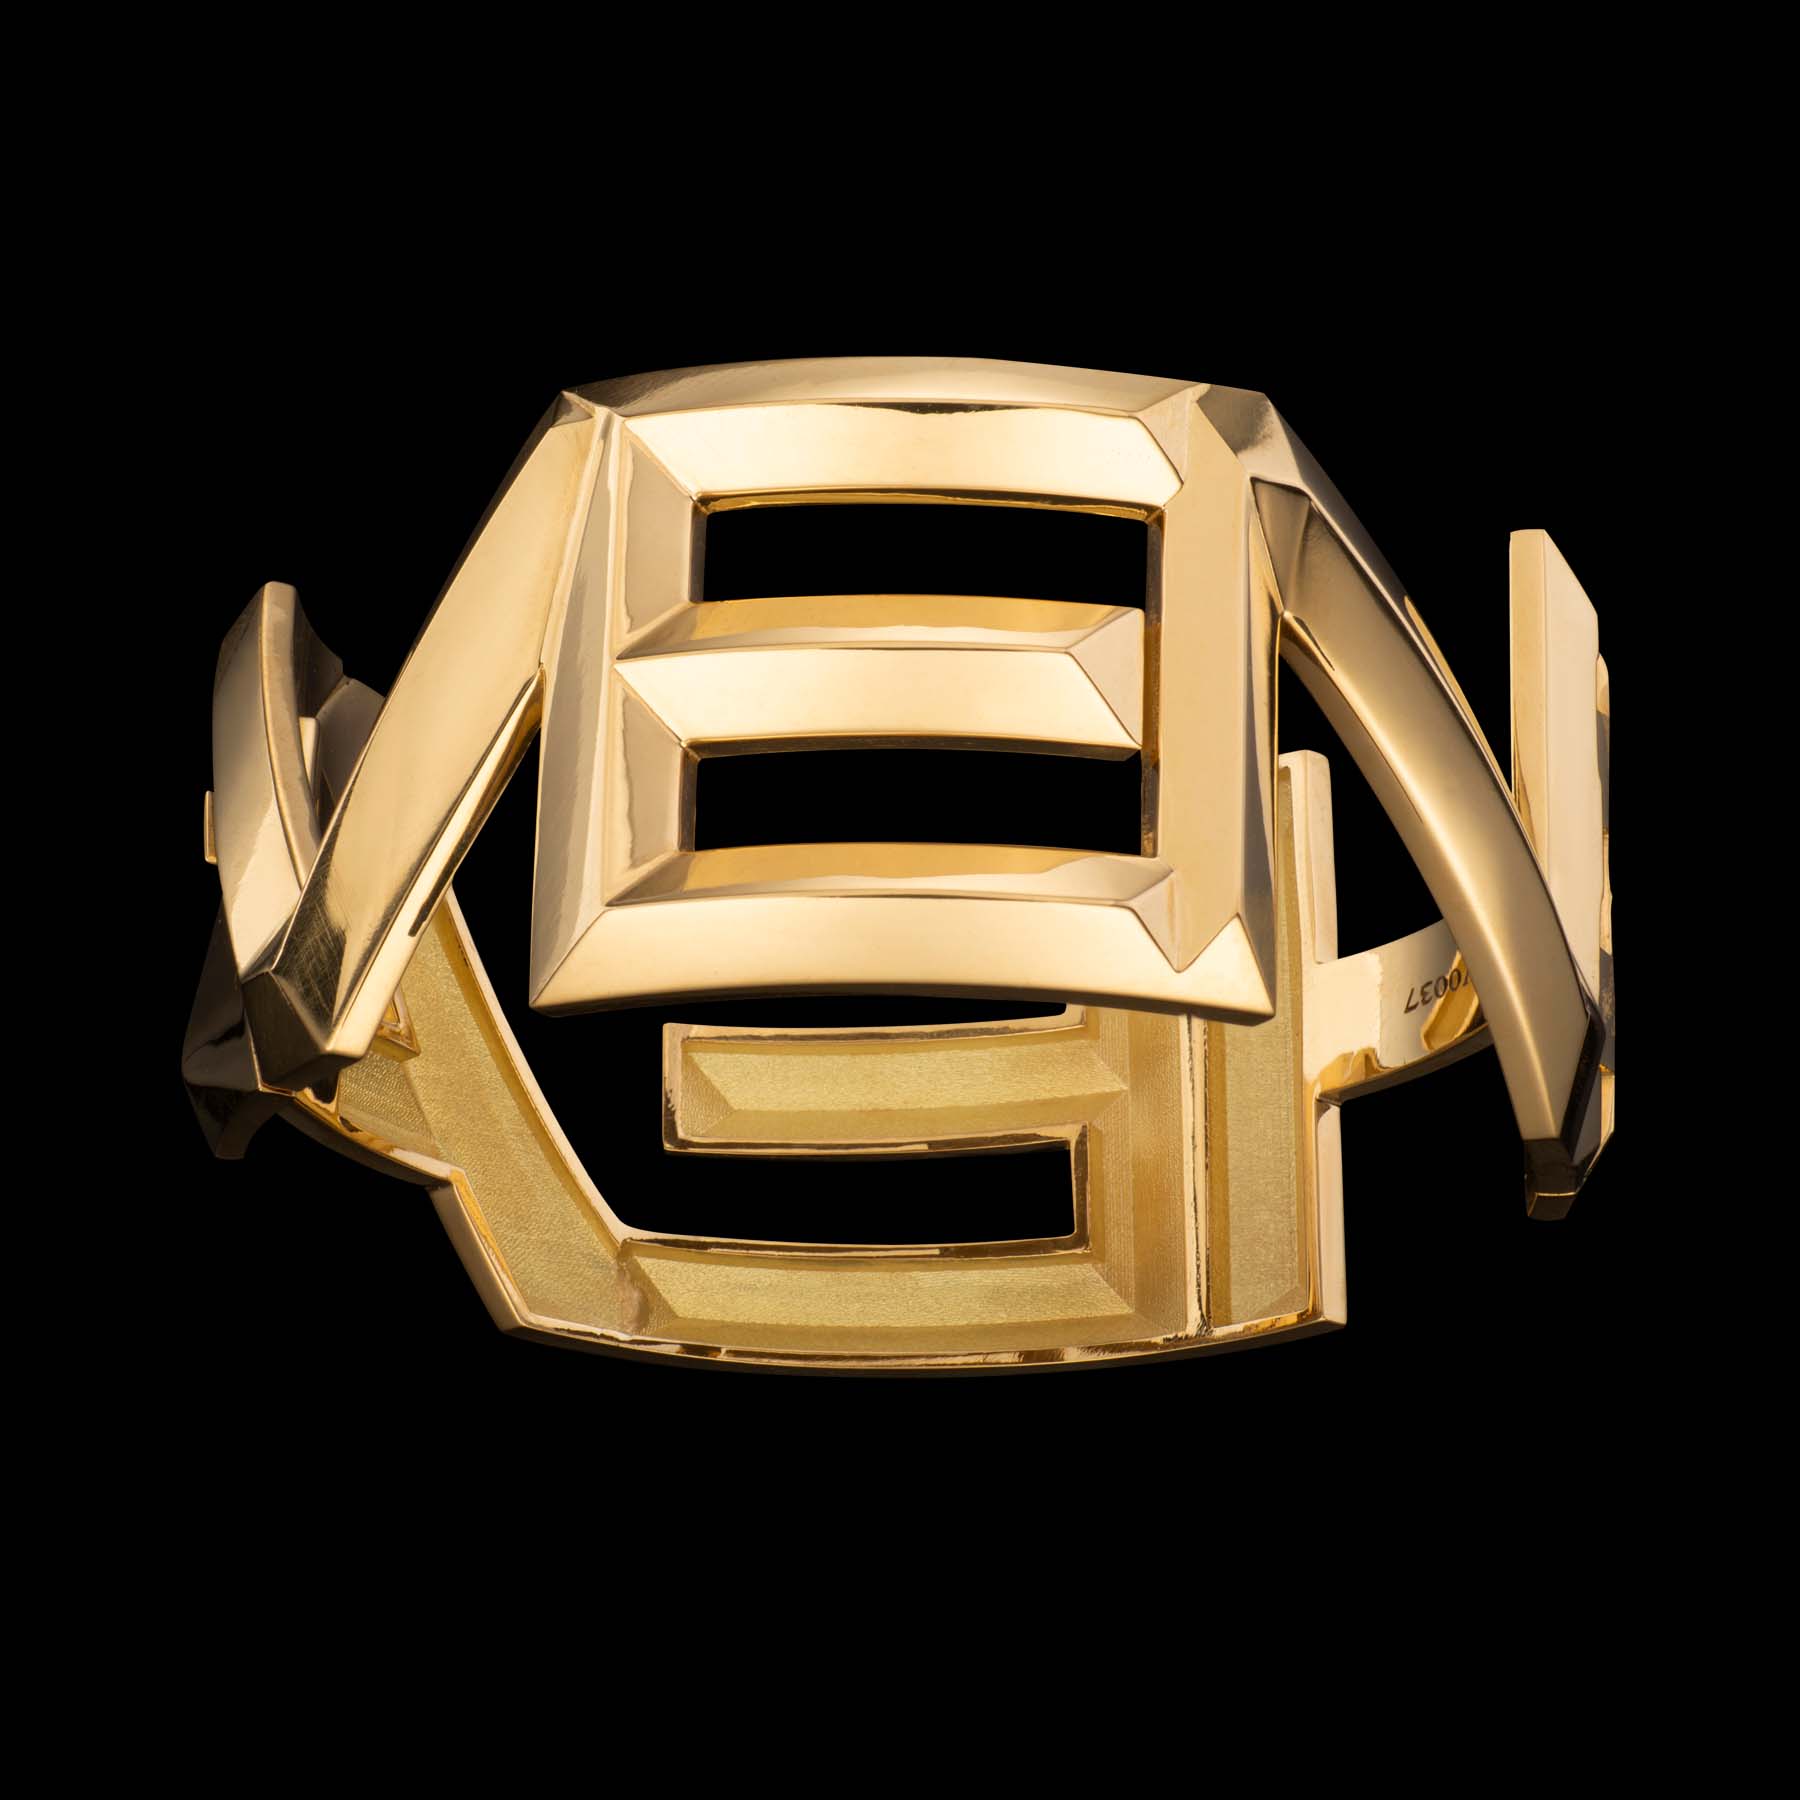 The ‘HEAVEN’ bangle by designer Solange Azagury-Partridge - 18 karat yellow gold form - front view 2